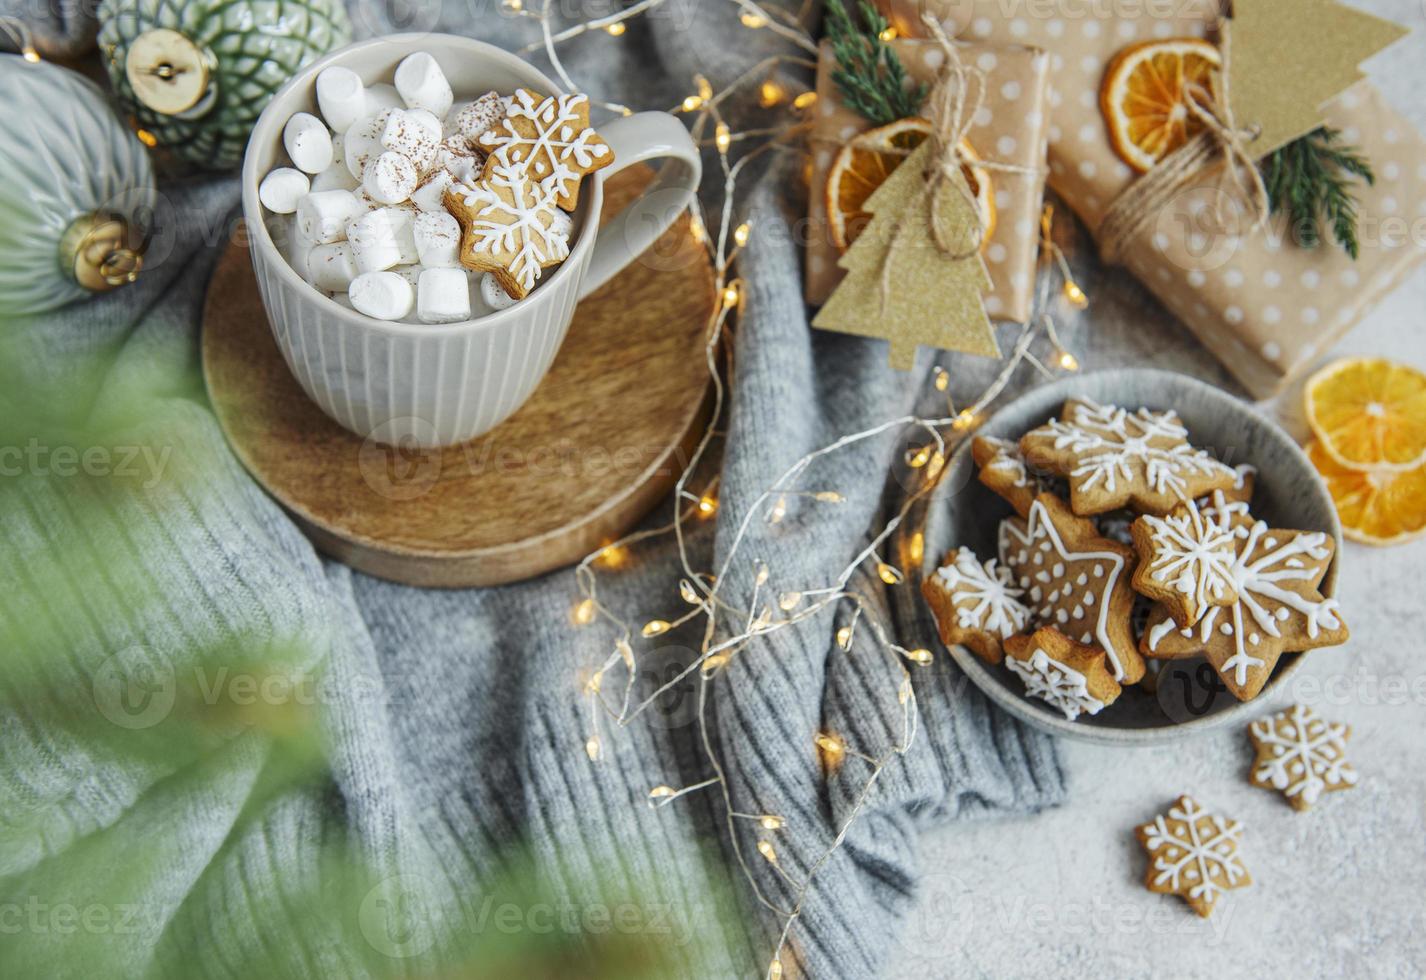 chocolate quente com marshmallows, bebida quente e aconchegante de natal foto